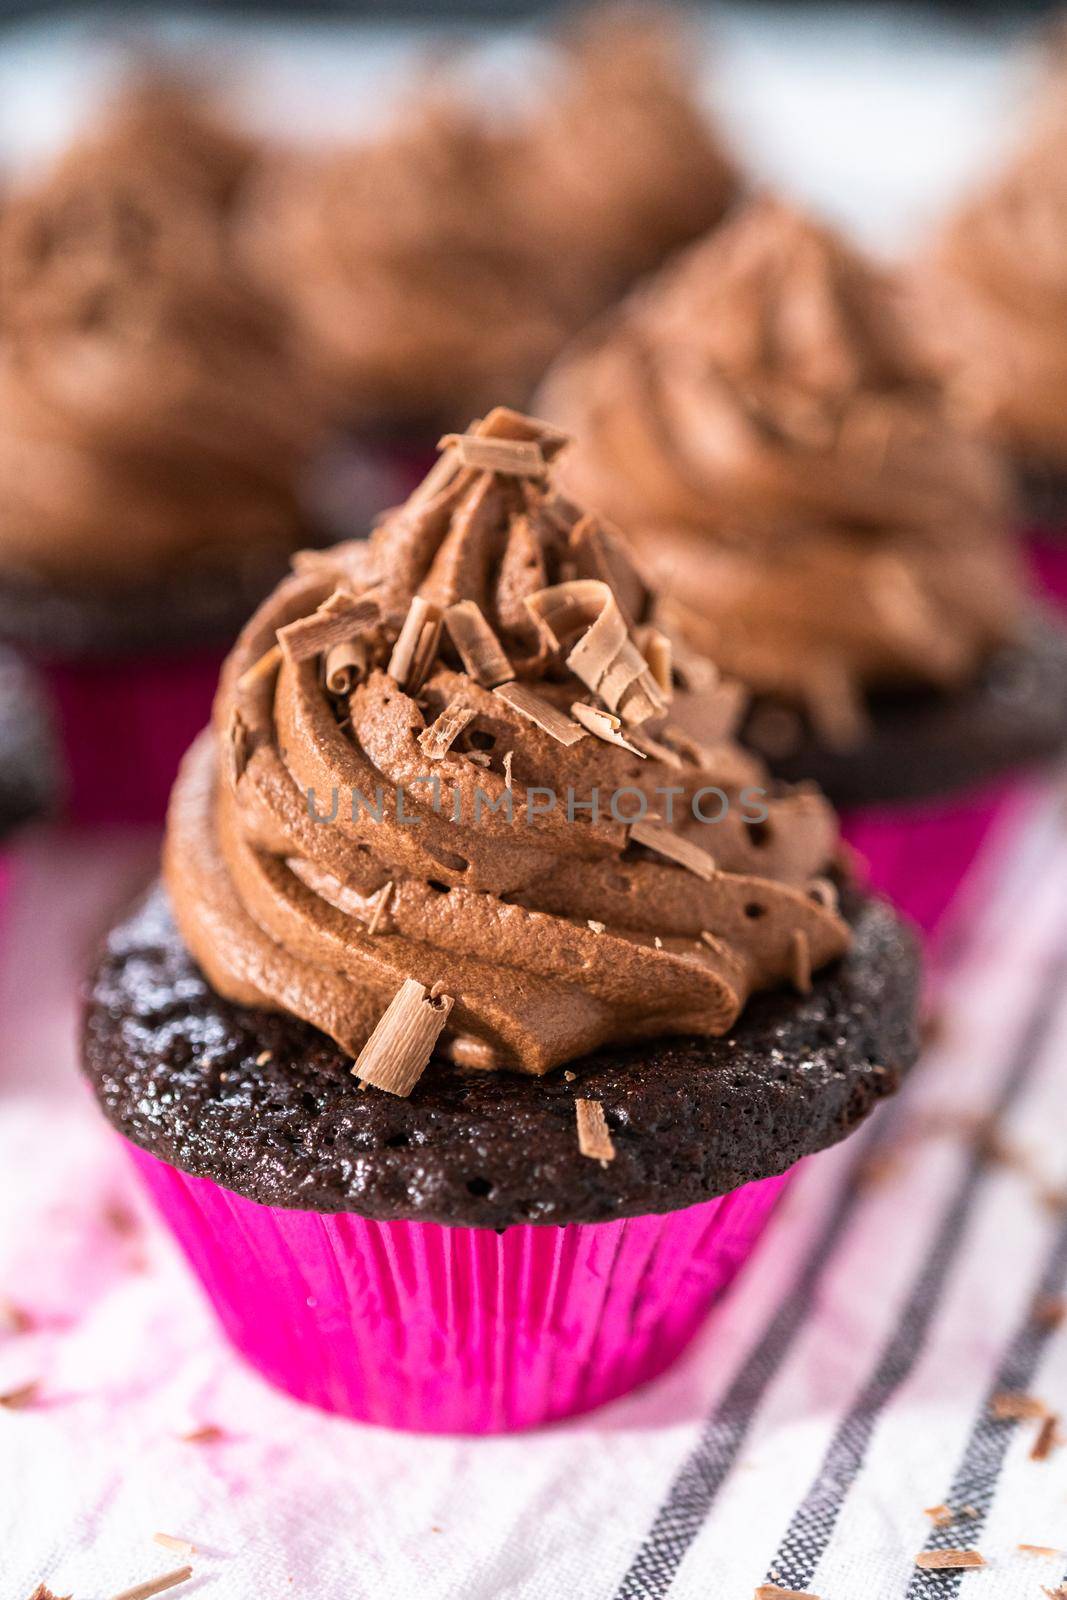 Chocolate ganache cupcake by arinahabich